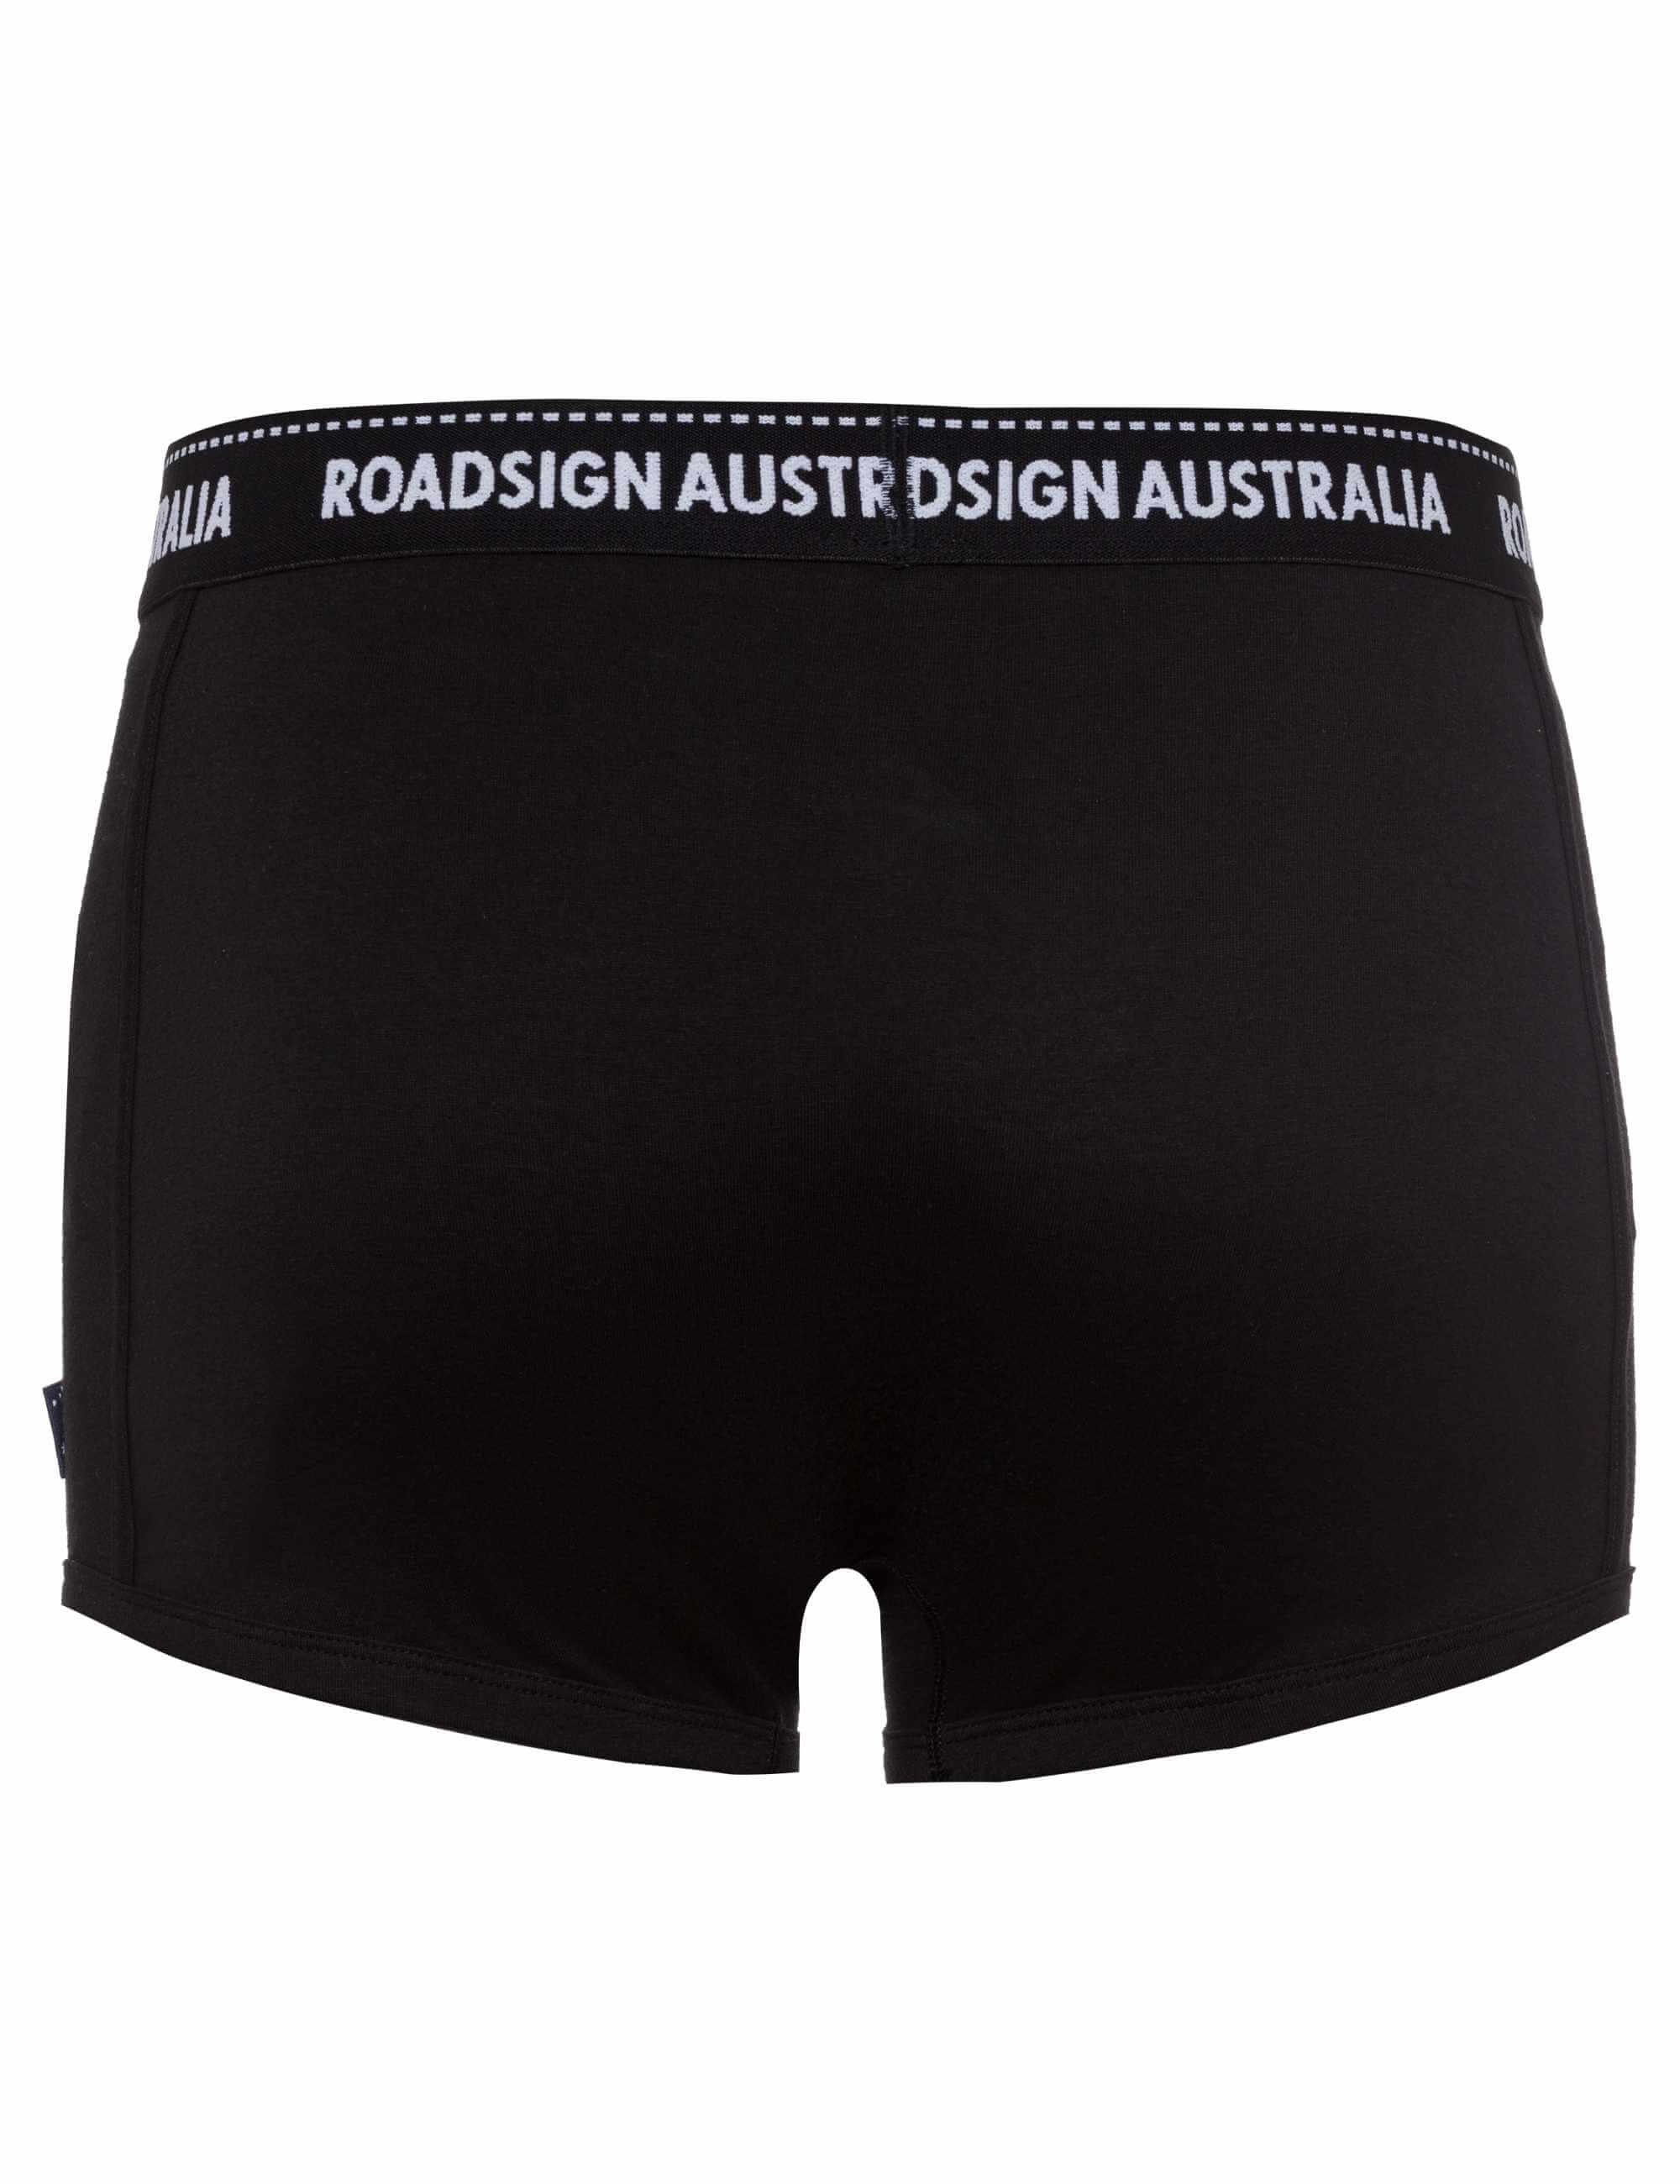 1-St) australia Boxer Simplicity Design Retro zeitlosen unifarben schwarz ROADSIGN (1, im